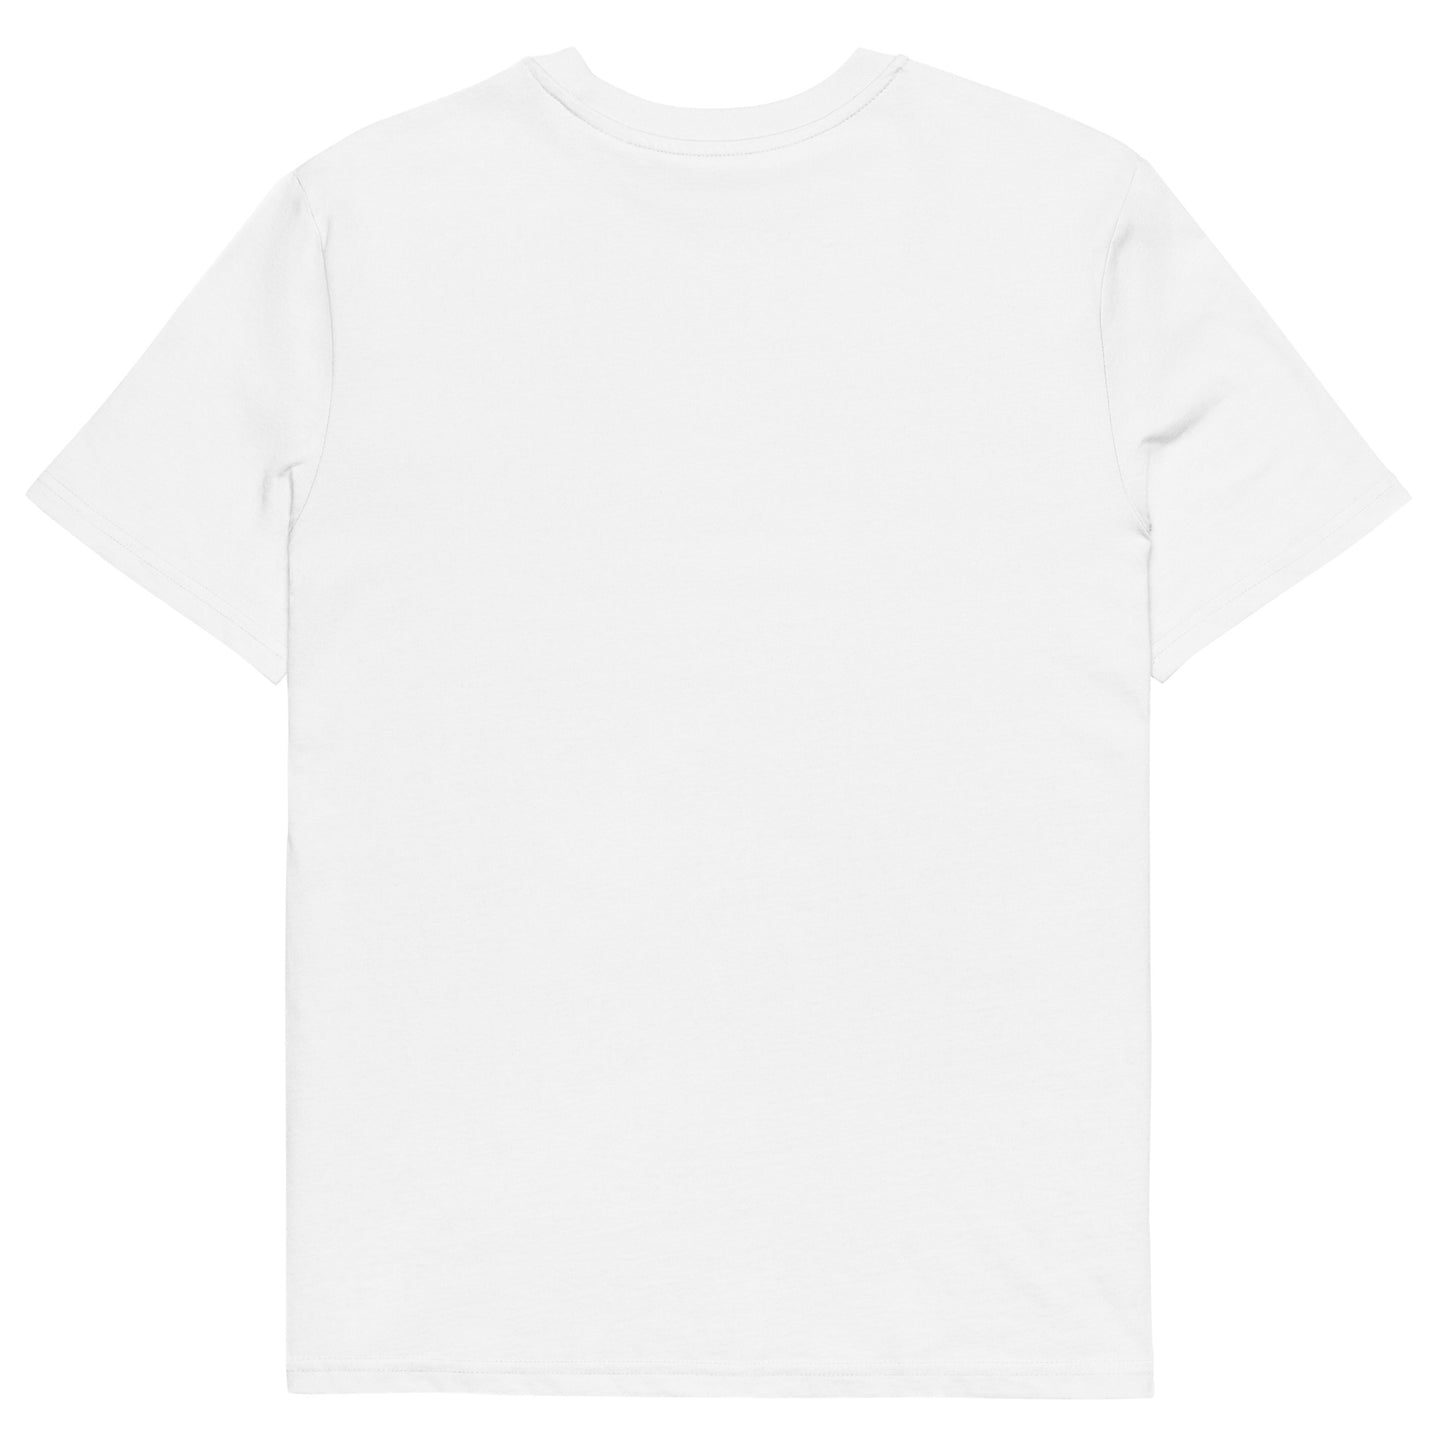 NO GAG REFLEX Unisex organic cotton t-shirt